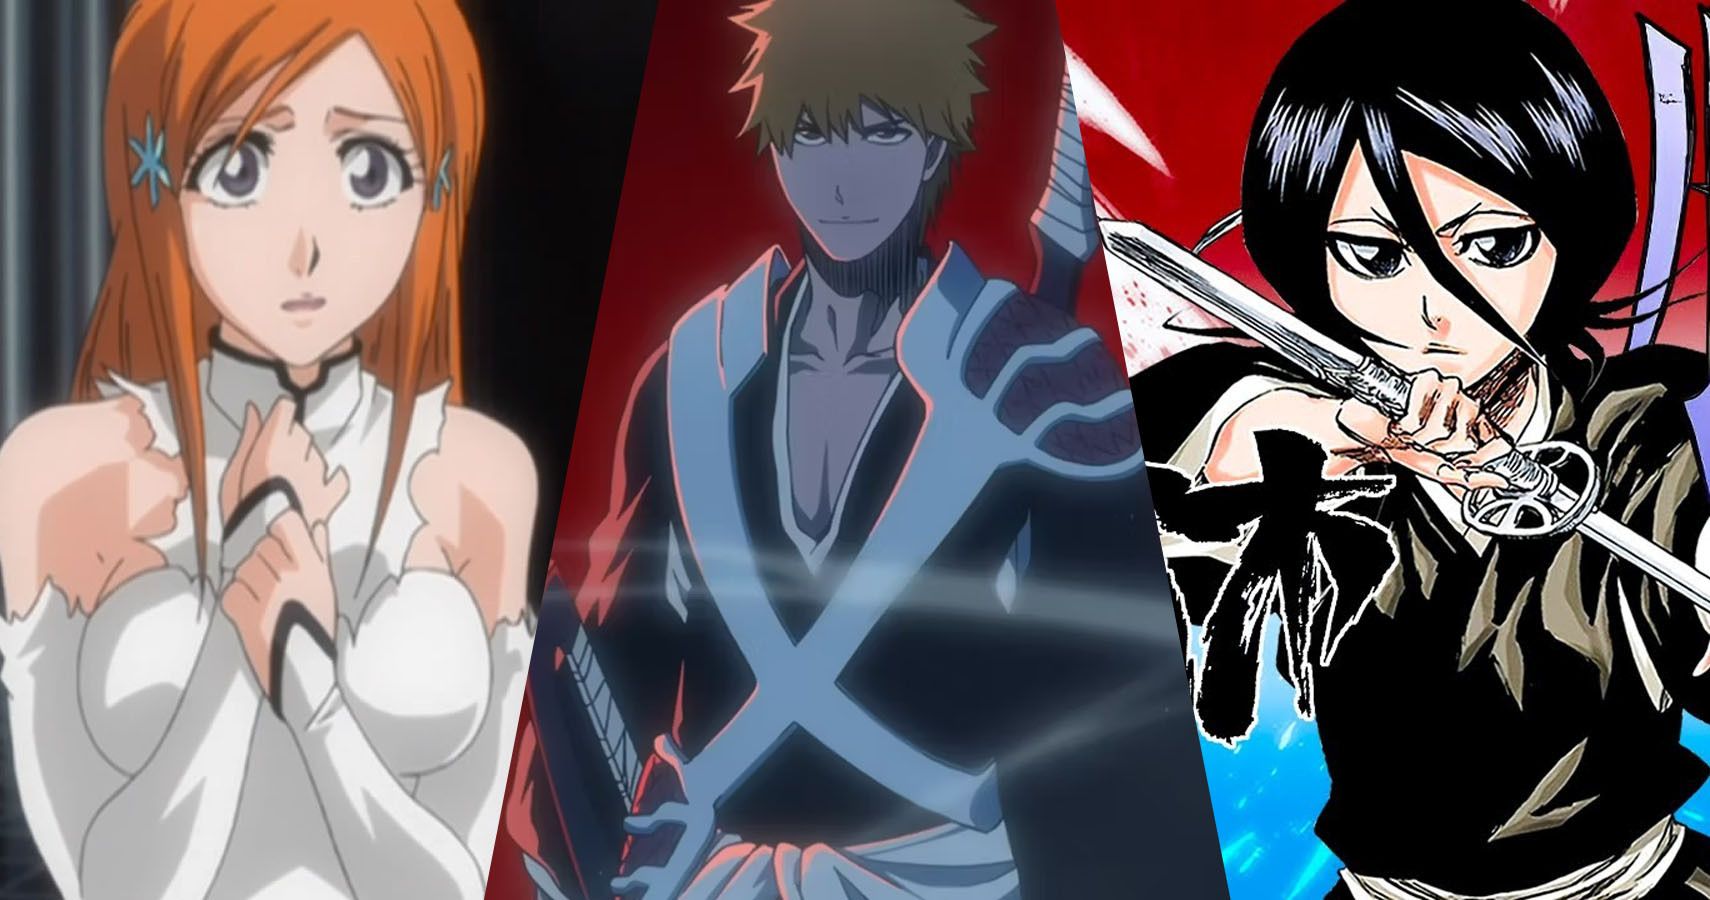 3 way split of Orihime, Ichigo, and Rukia